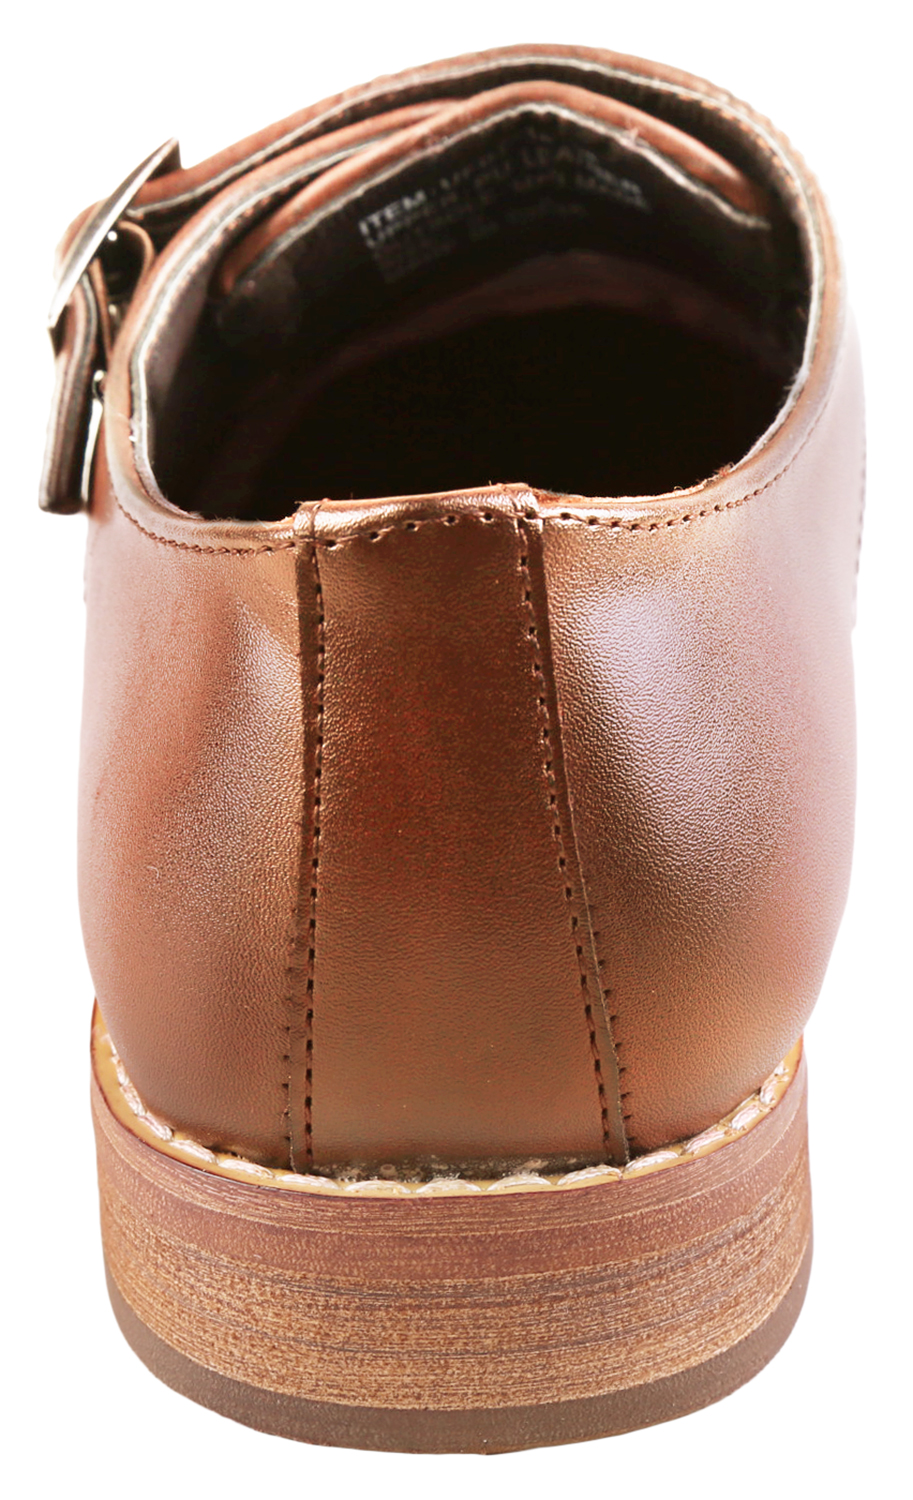 Urban Fox Allen Men's Dress Shoe | Double Monk Strap | Brogue | Wingtip Shoes for Men | Light Brown 14 M US - image 4 of 7